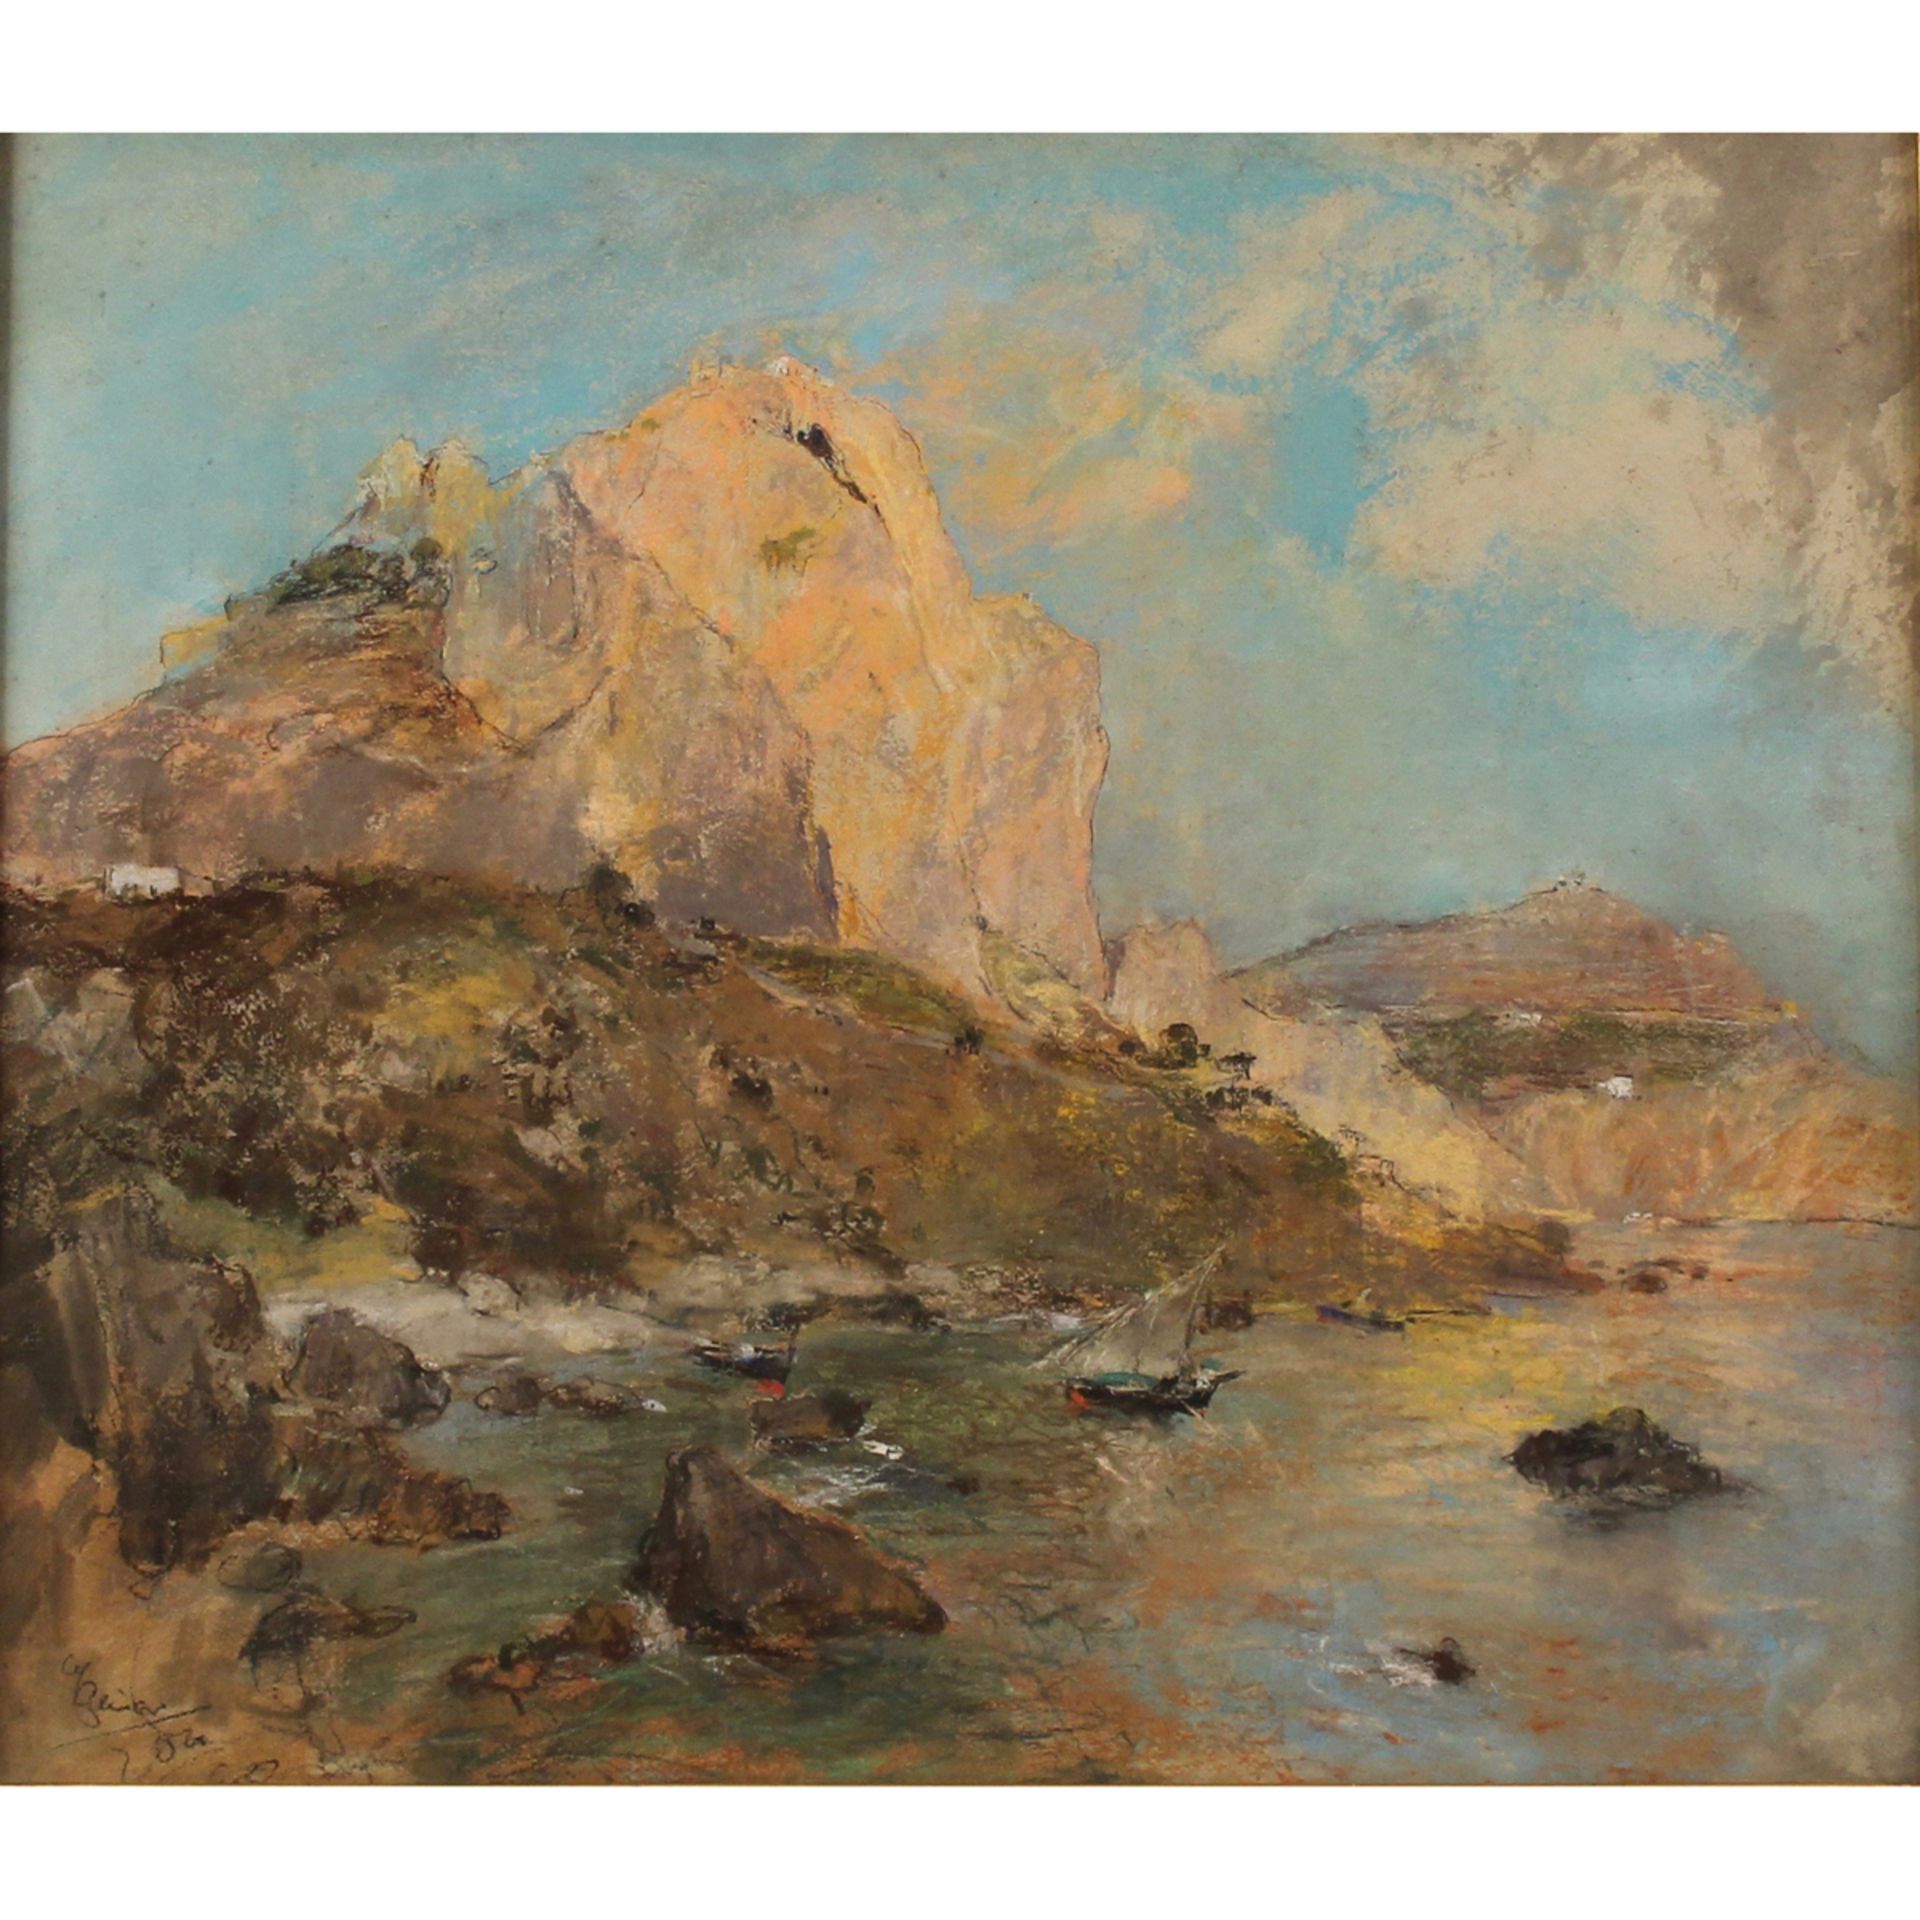 GIUSEPPE CASCIARO (1863-1941) "Marina con scogliera" - "Marina with reef"